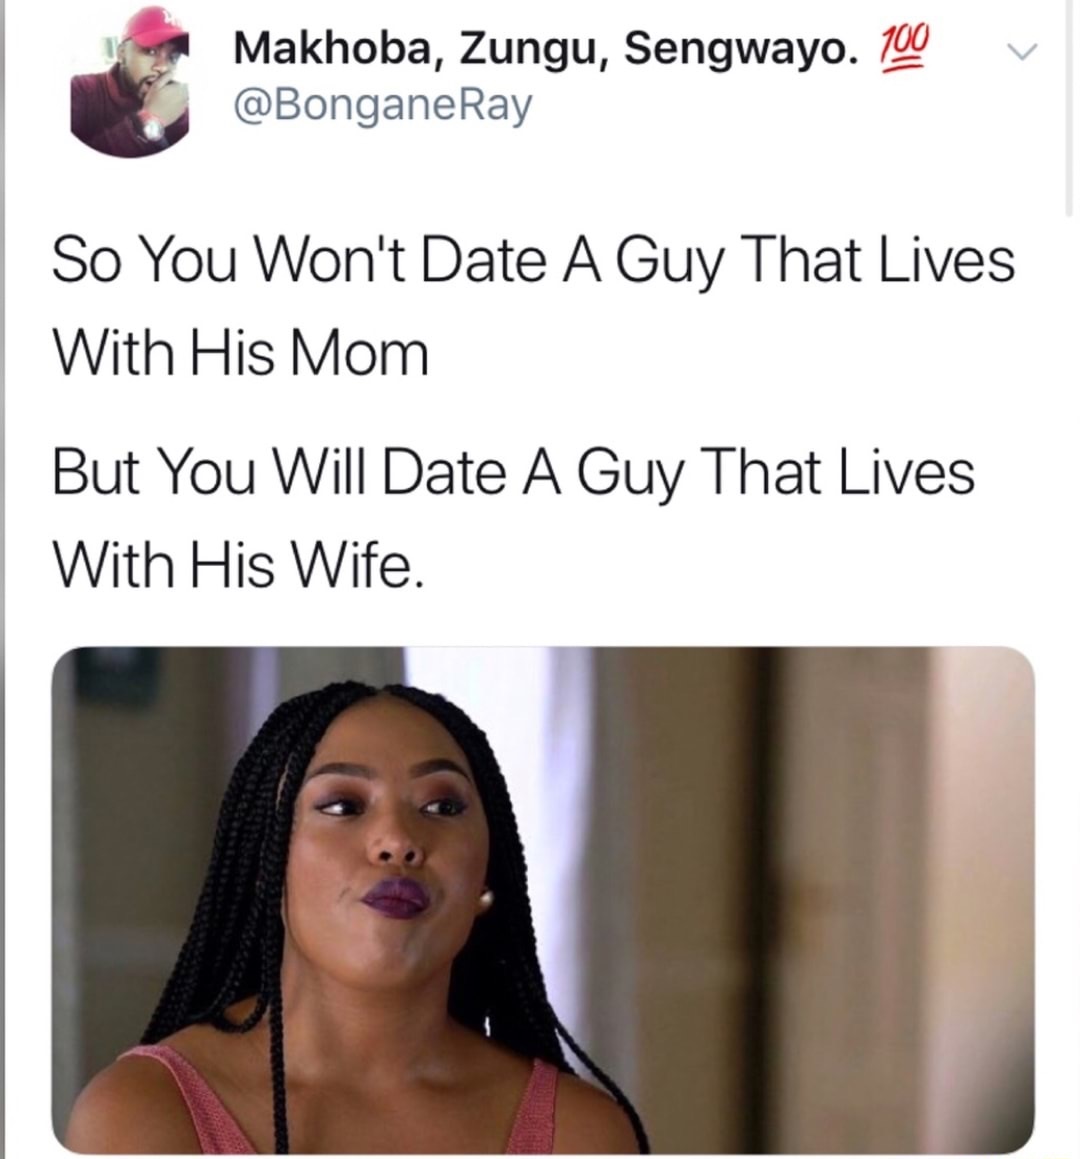 memes - so you won t date a guy - Makhoba, Zungu, Sengwayo. 100 Ray So You Won't Date A Guy That Lives With His Mom But You Will Date A Guy That Lives With His Wife.